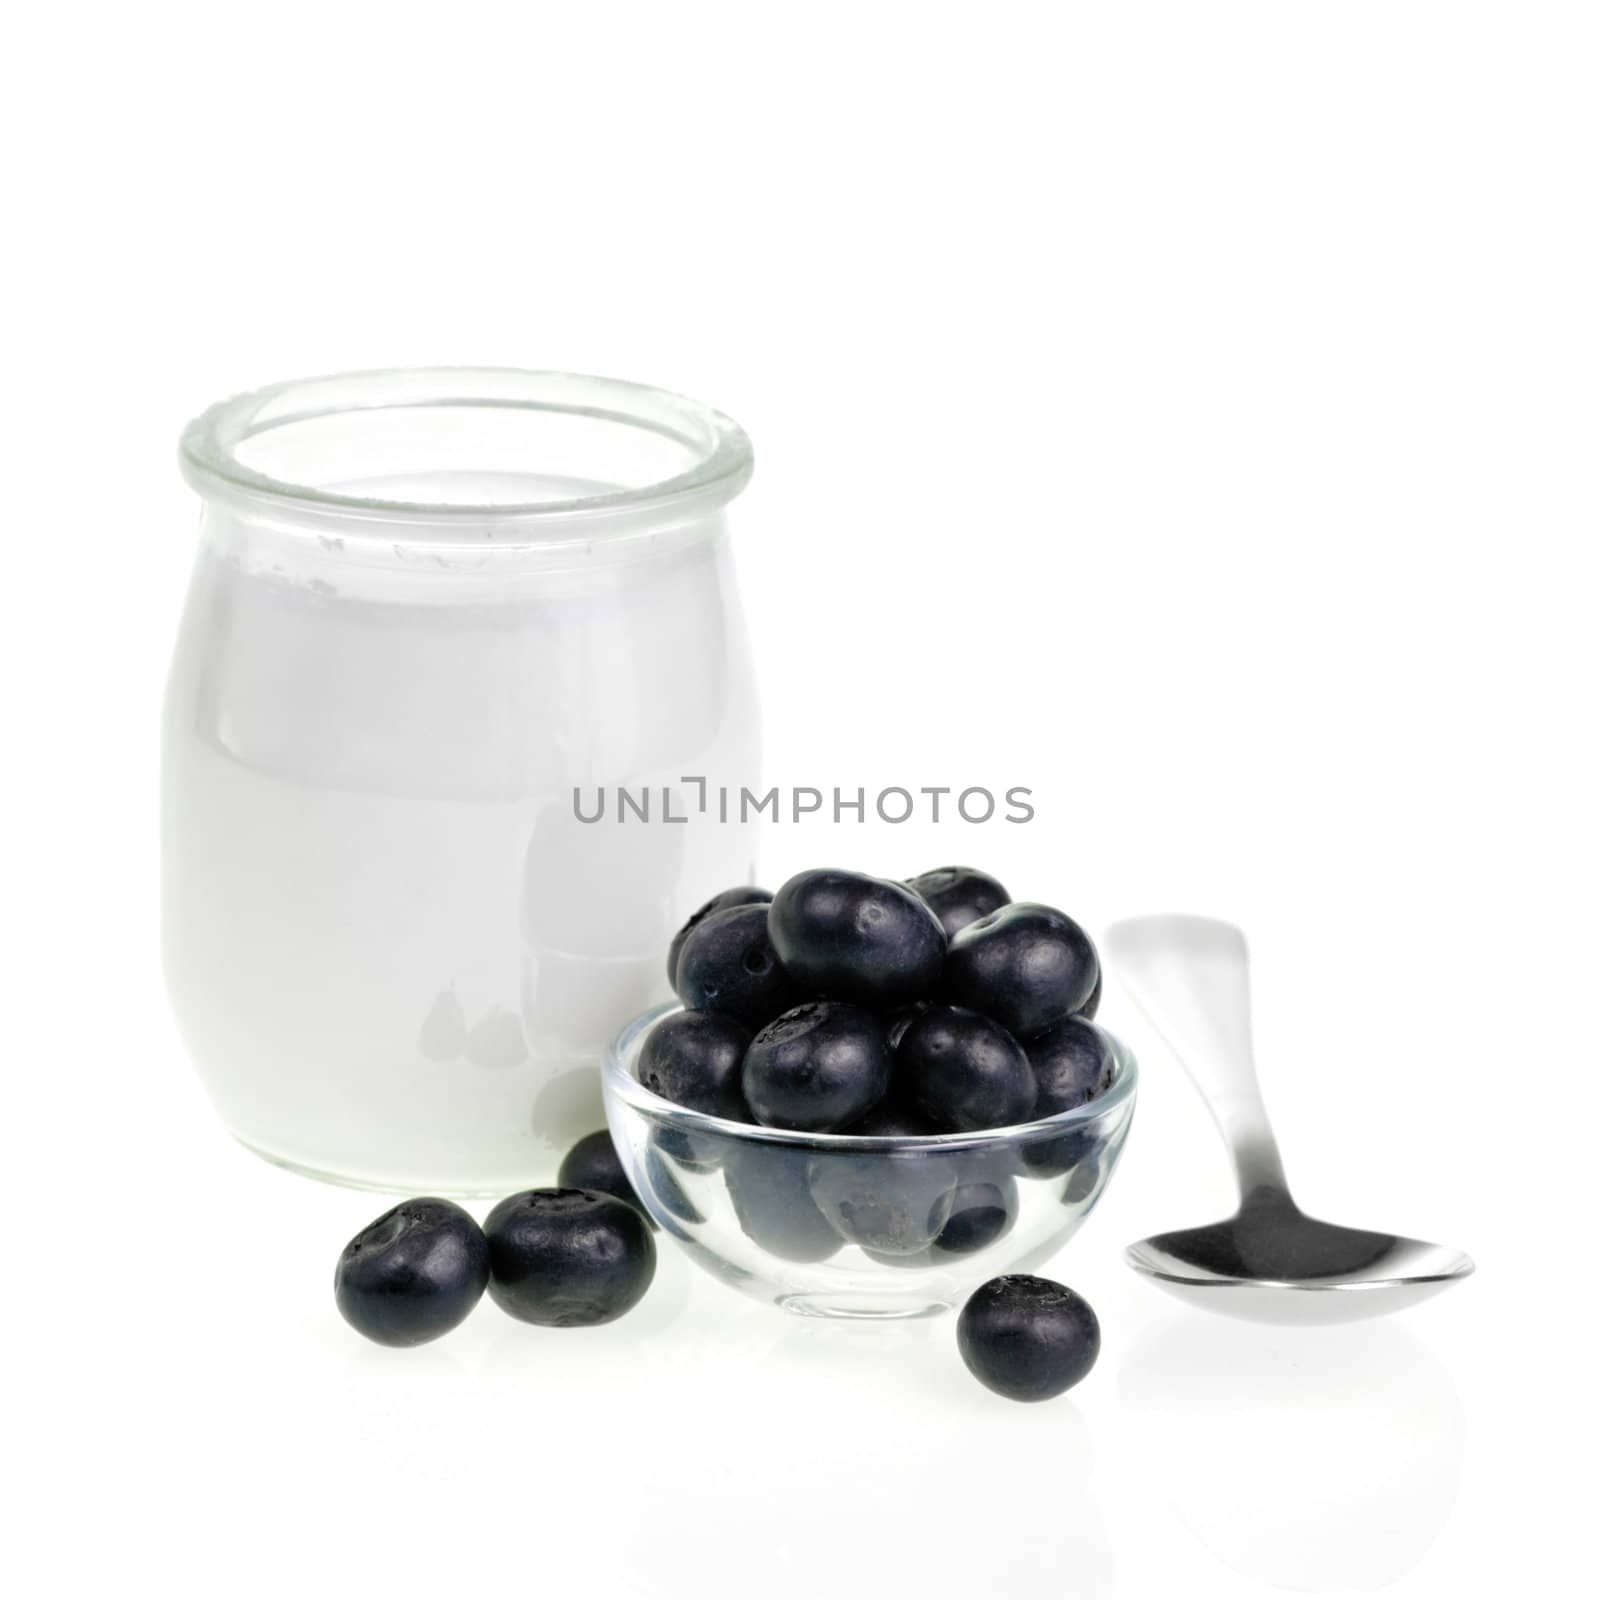 Old-fashioned yogurt jar and Blueberries on white background